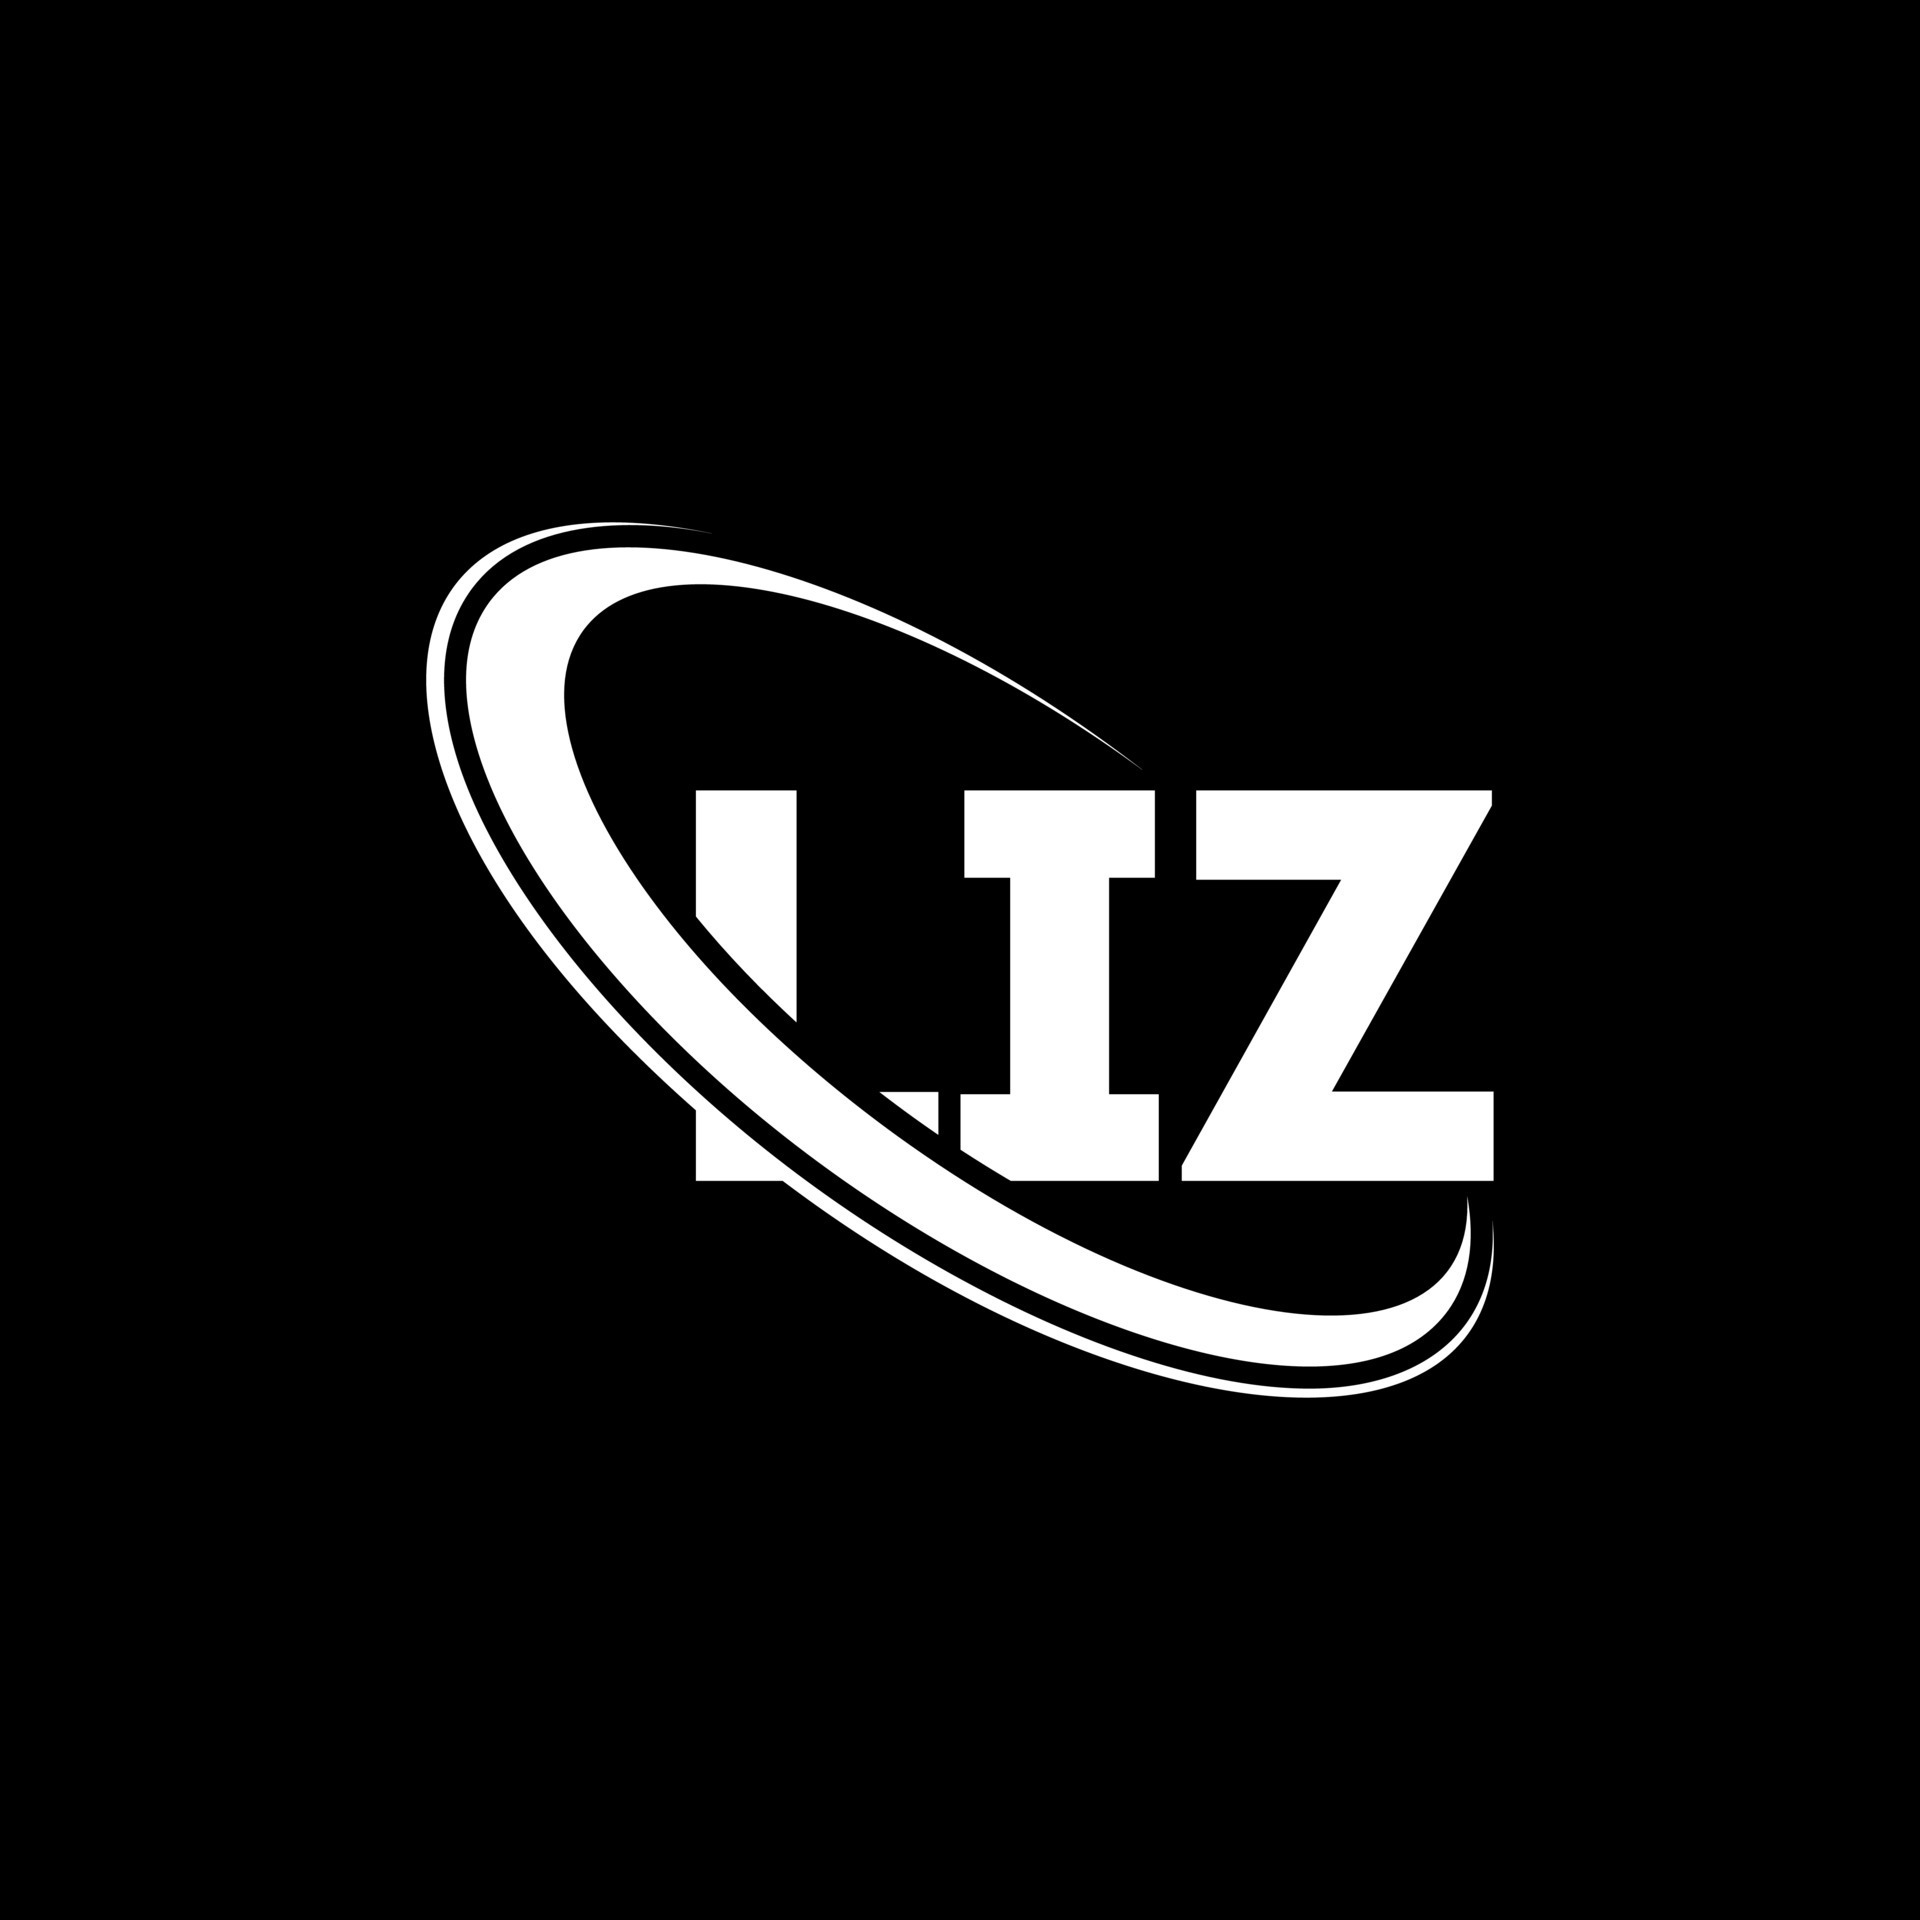 LIZ logo. LIZ letter. LIZ letter logo design. Initials LIZ logo linked ...